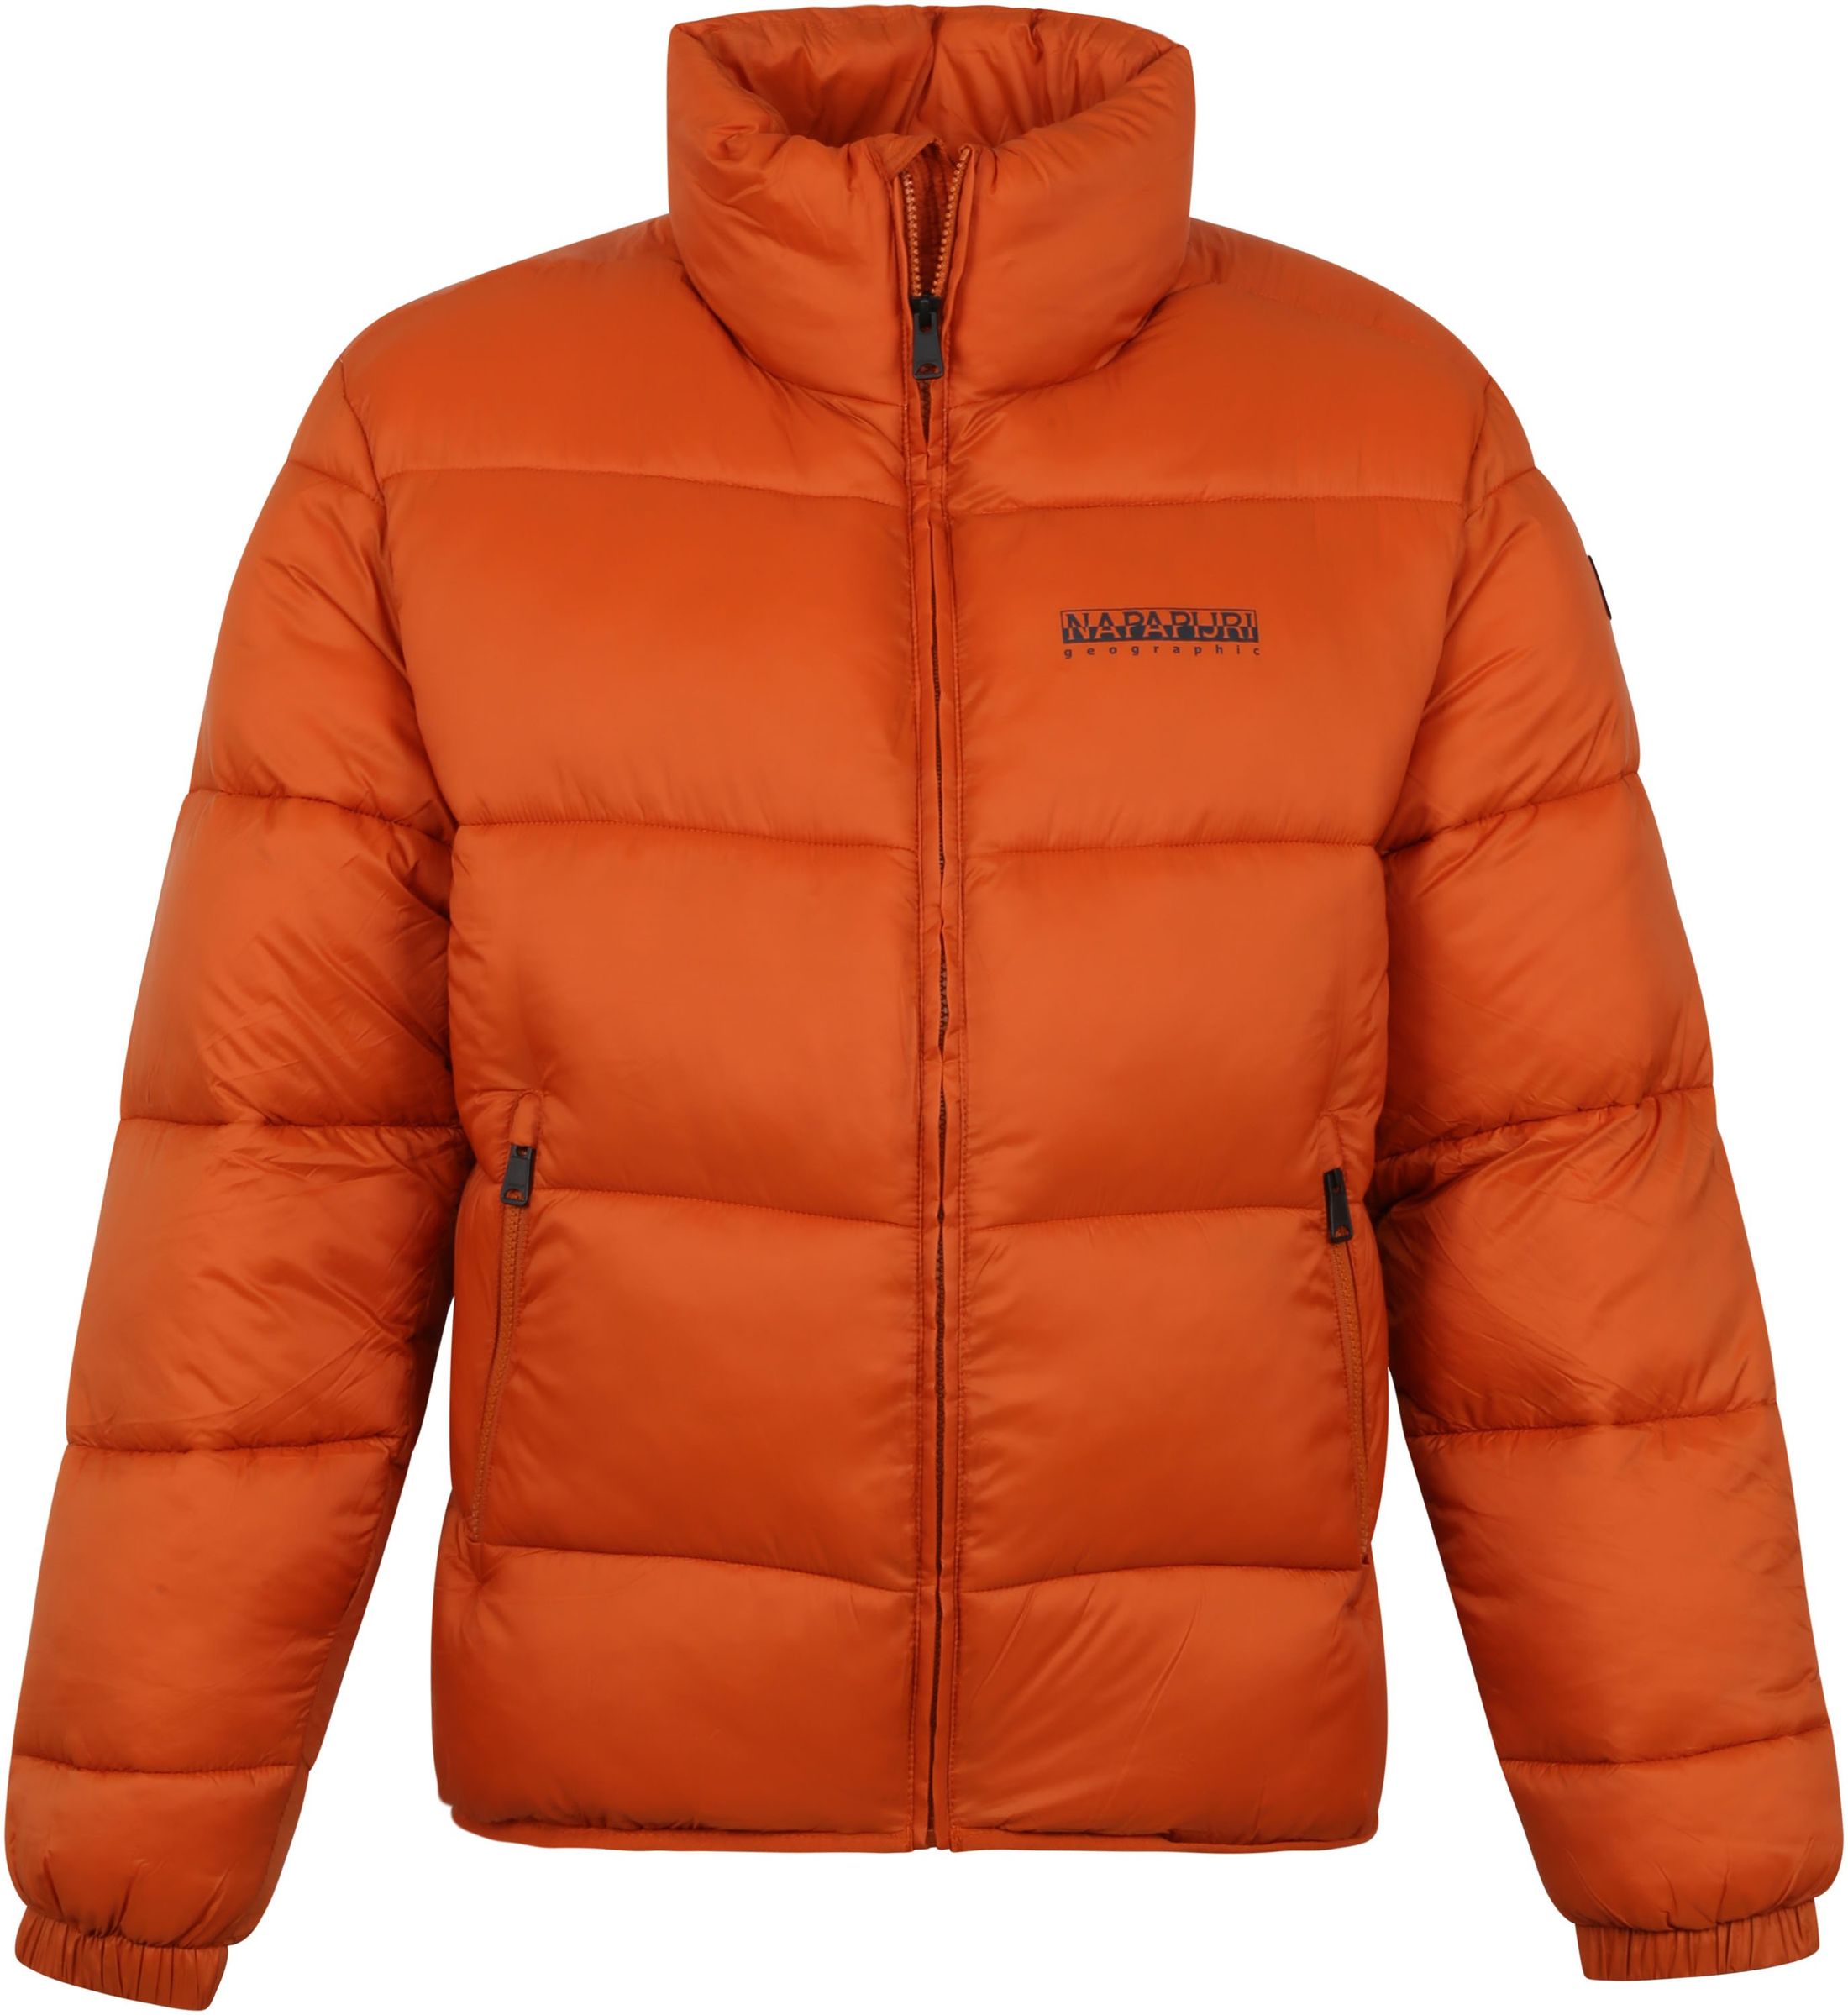 Napapijri Jacket Suomi Orange size L